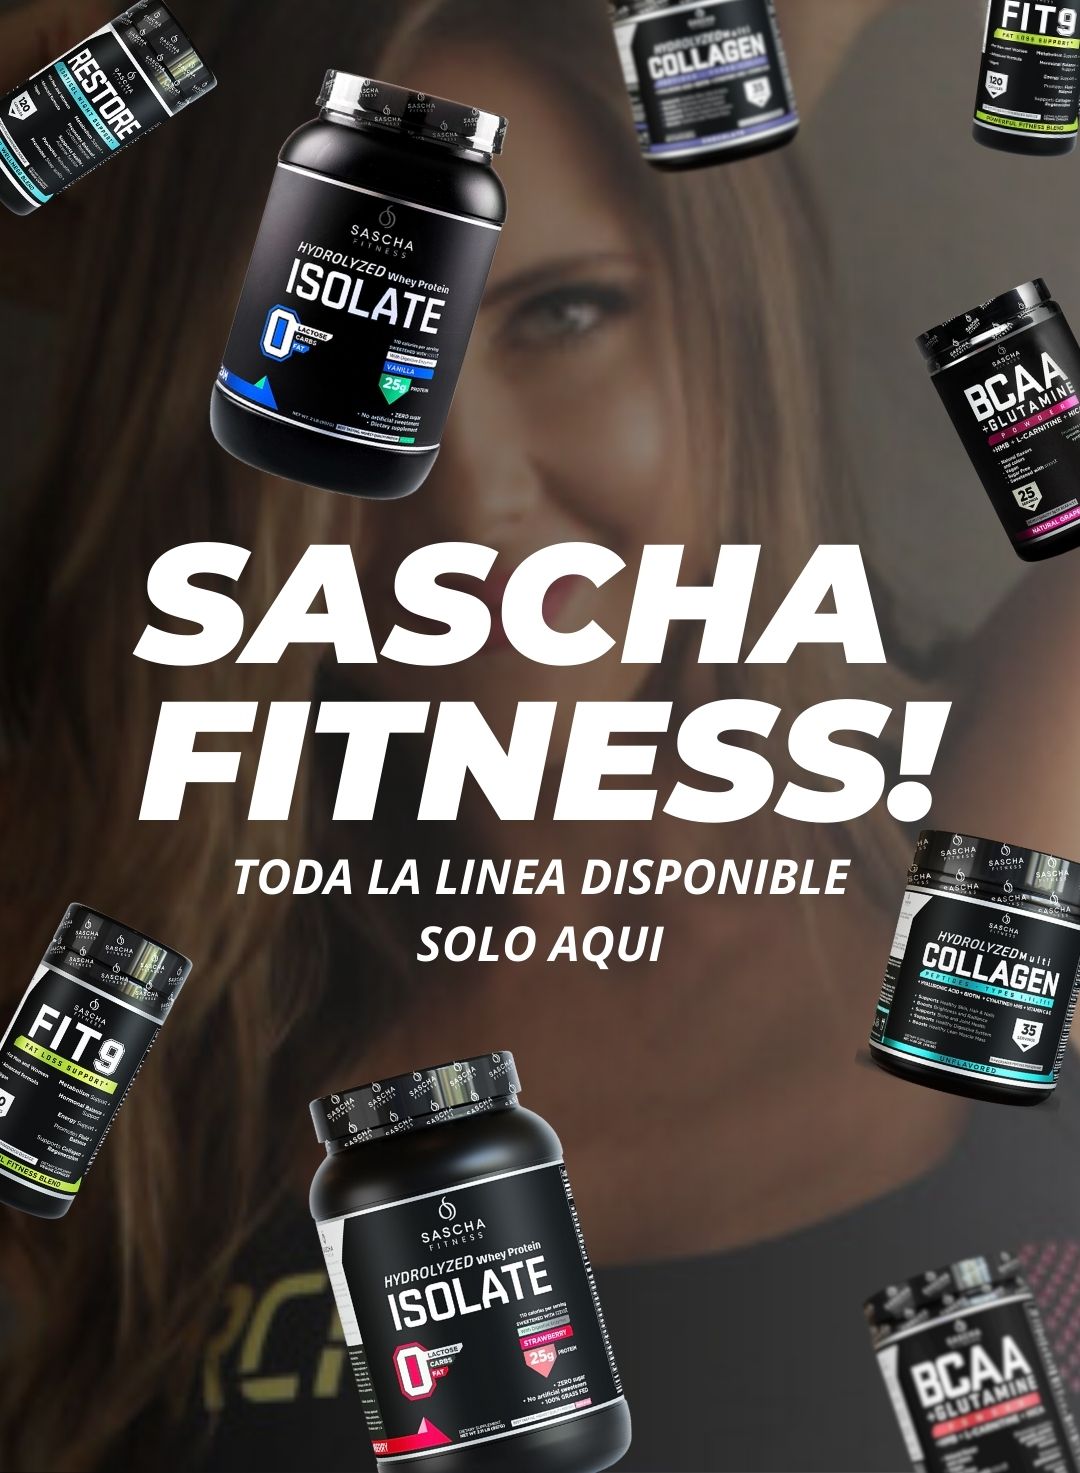 Sascha Fitness